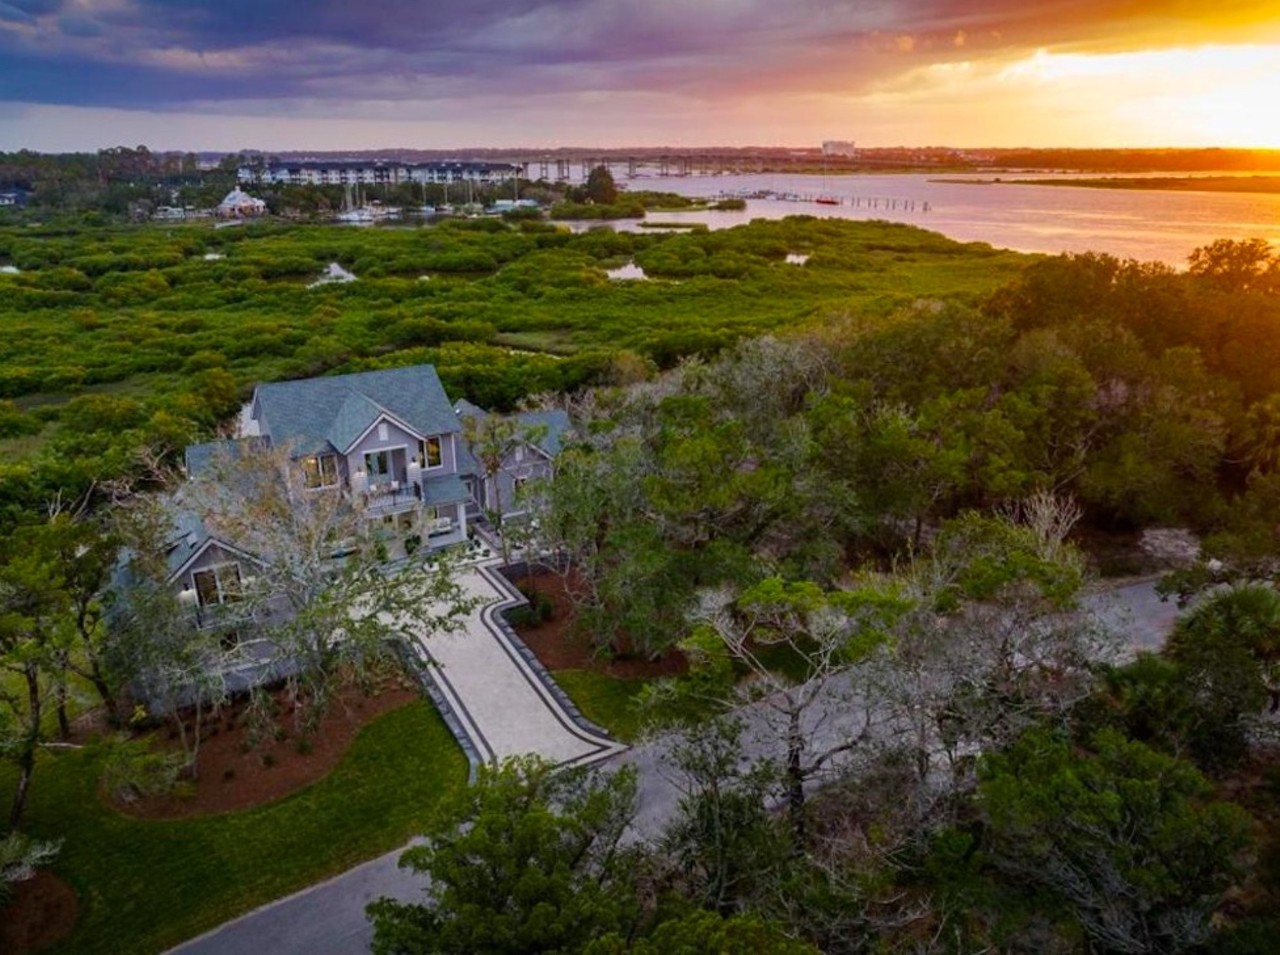 HGTV is giving away this Florida home on Anastasia Island, and it comes